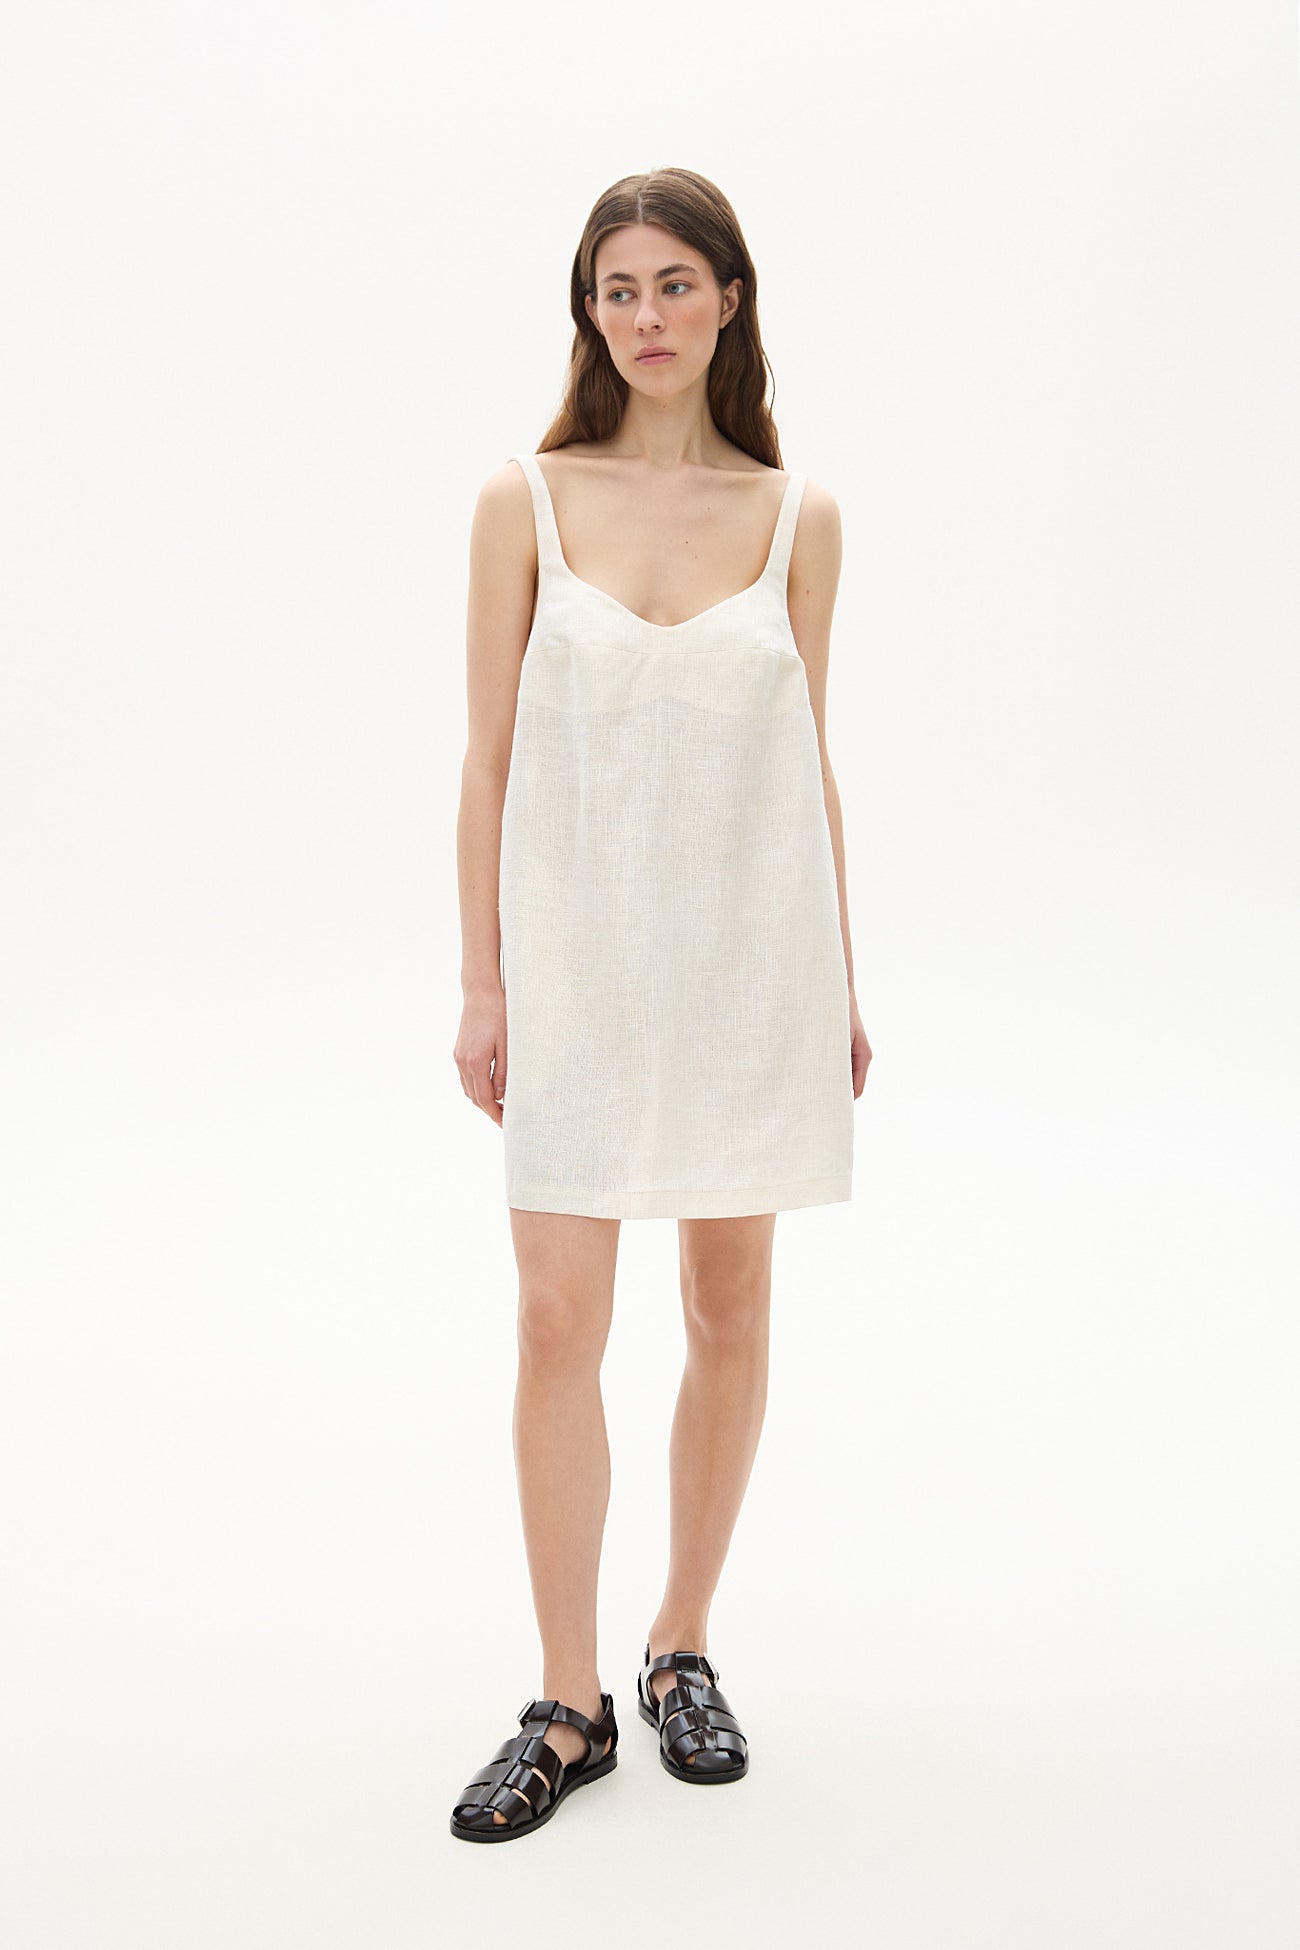 Linen mini dress with bra creamy